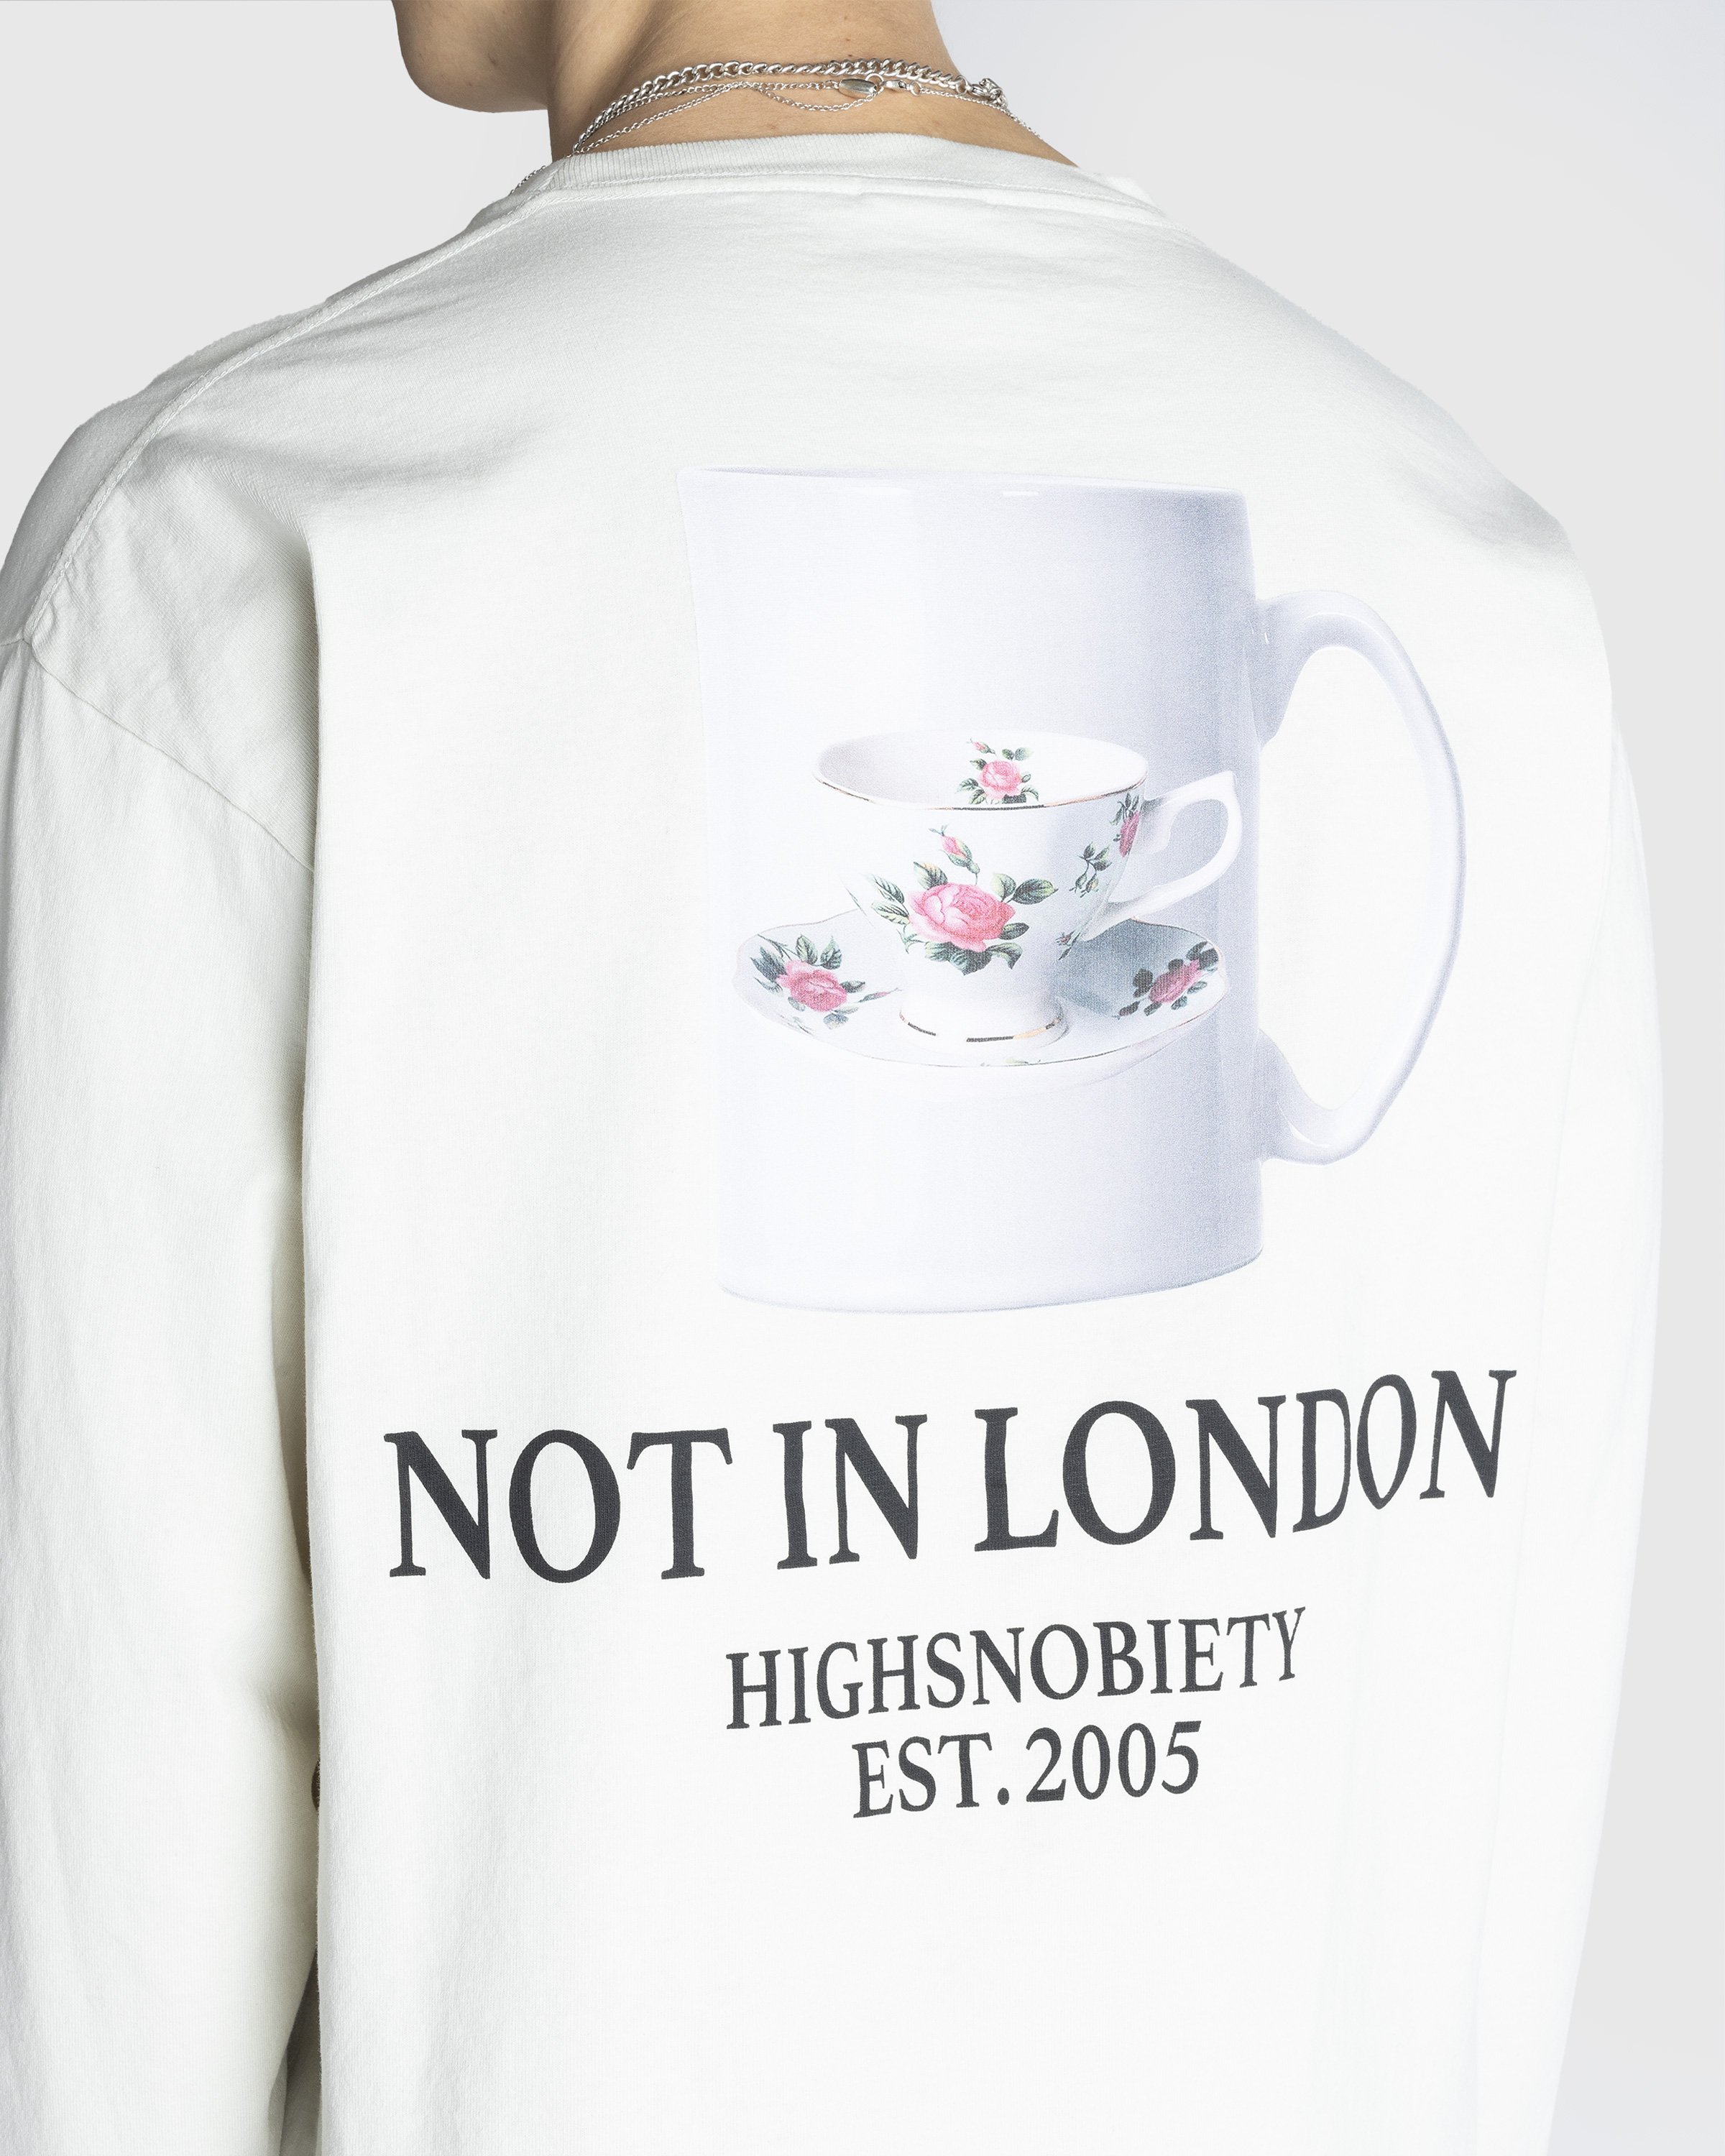 Highsnobiety - London LS Jersey - Clothing -  - Image 6